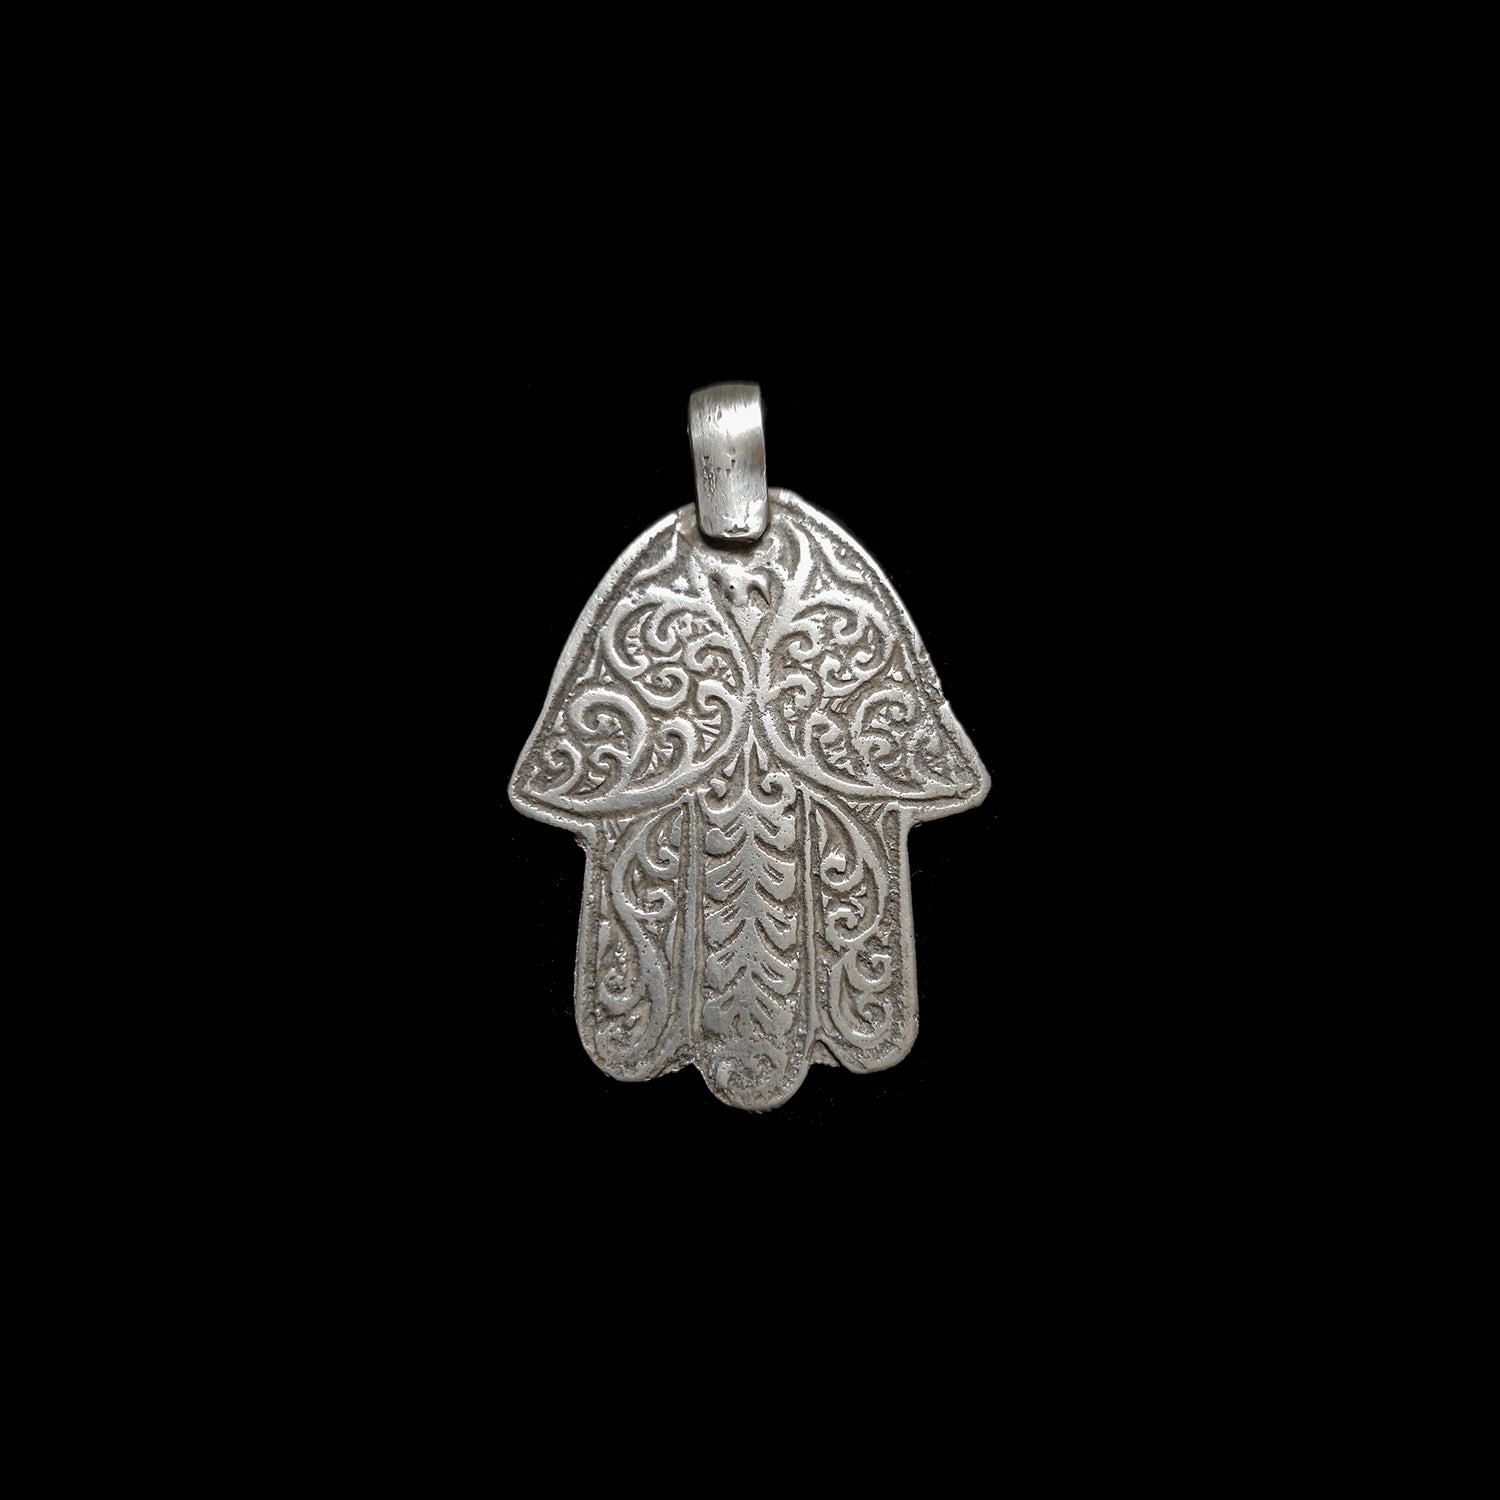 Vintage silver hamsa pendant from Fez, Morocco - medium